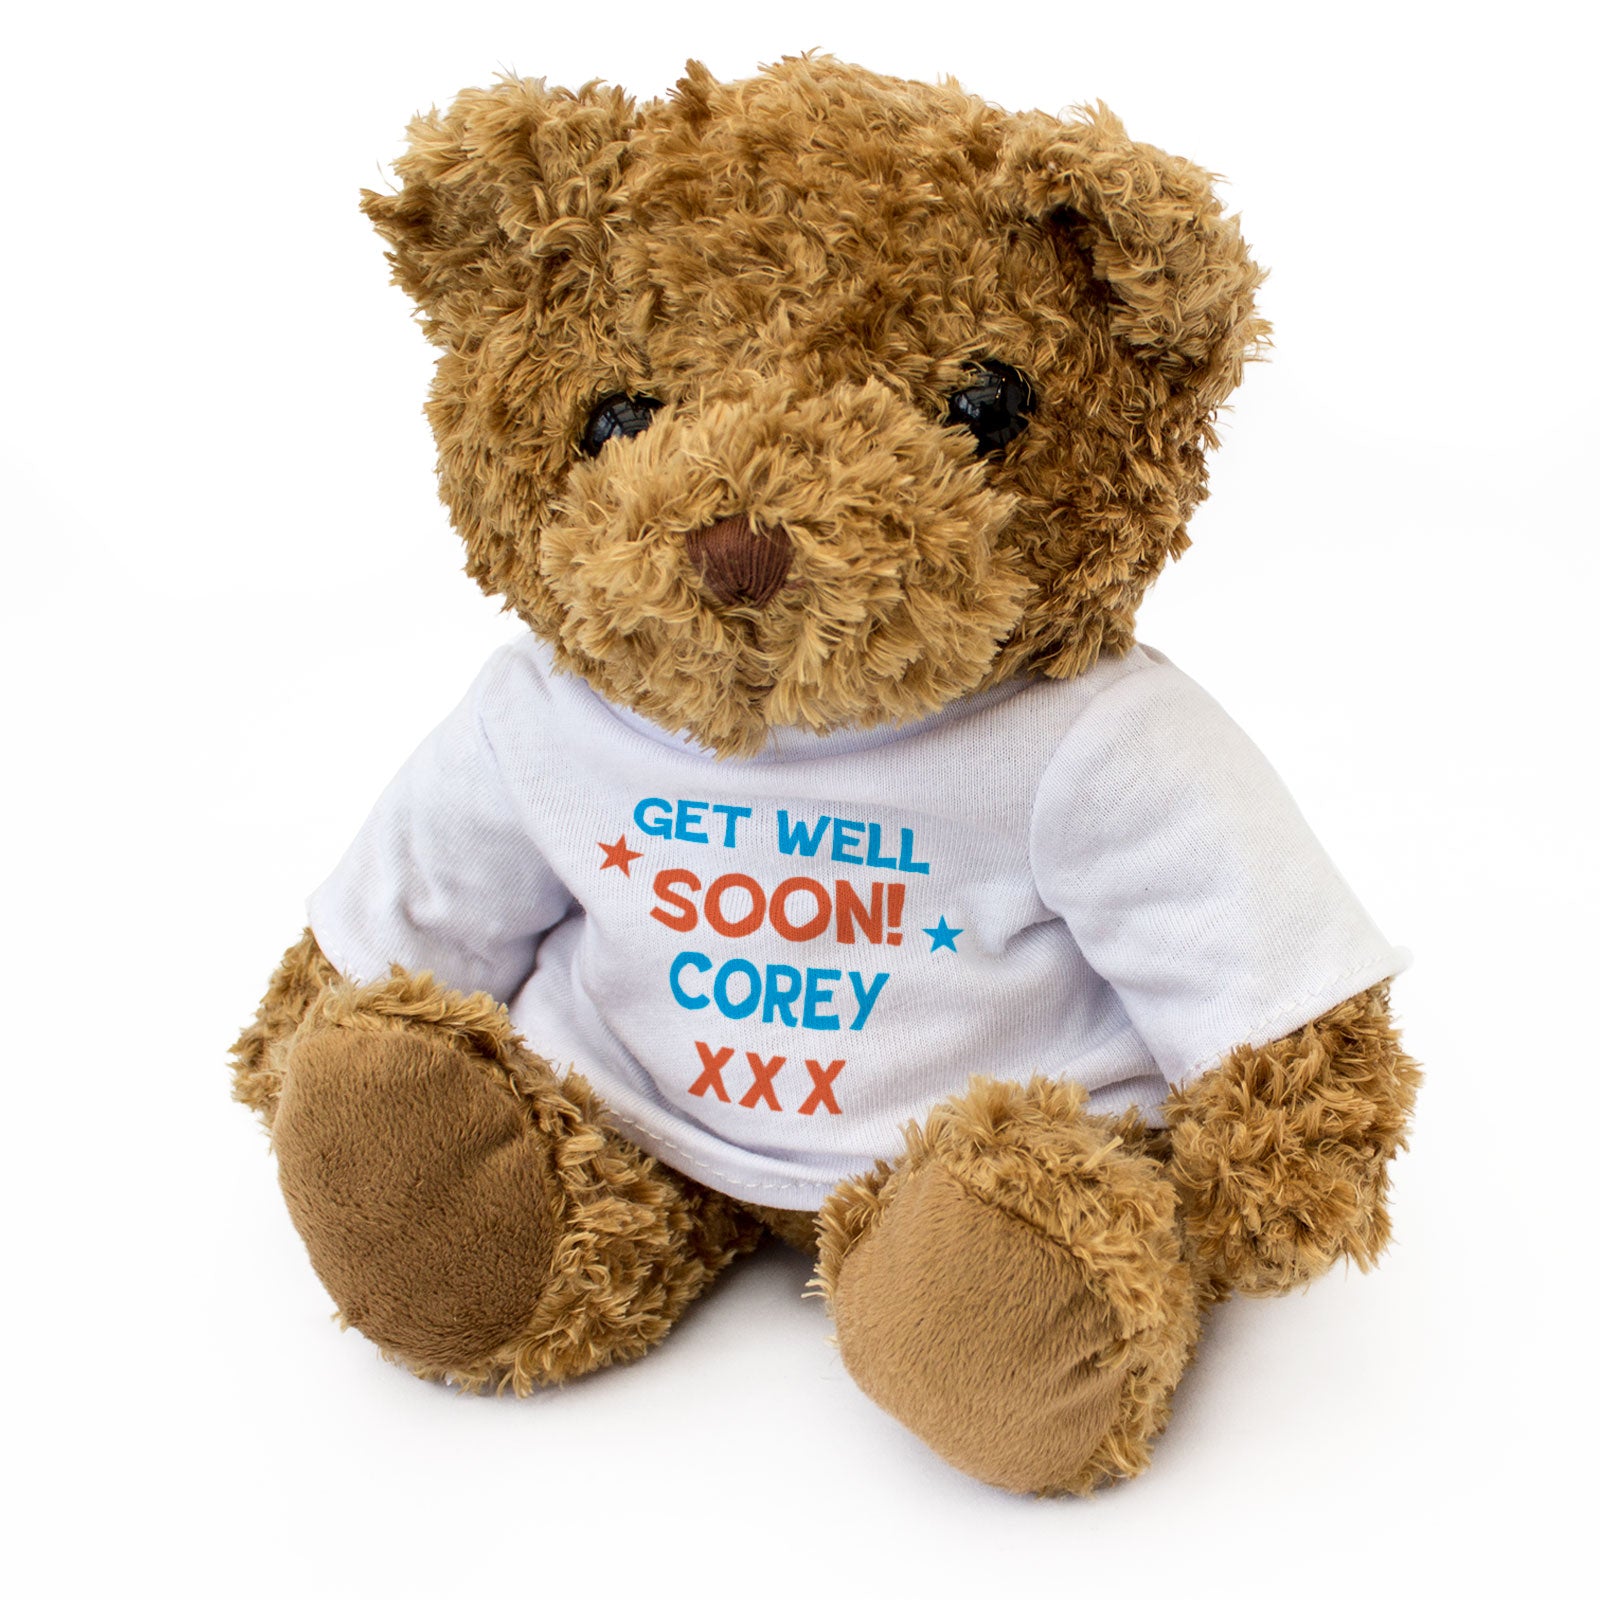 Get Well Soon Corey - Teddy Bear